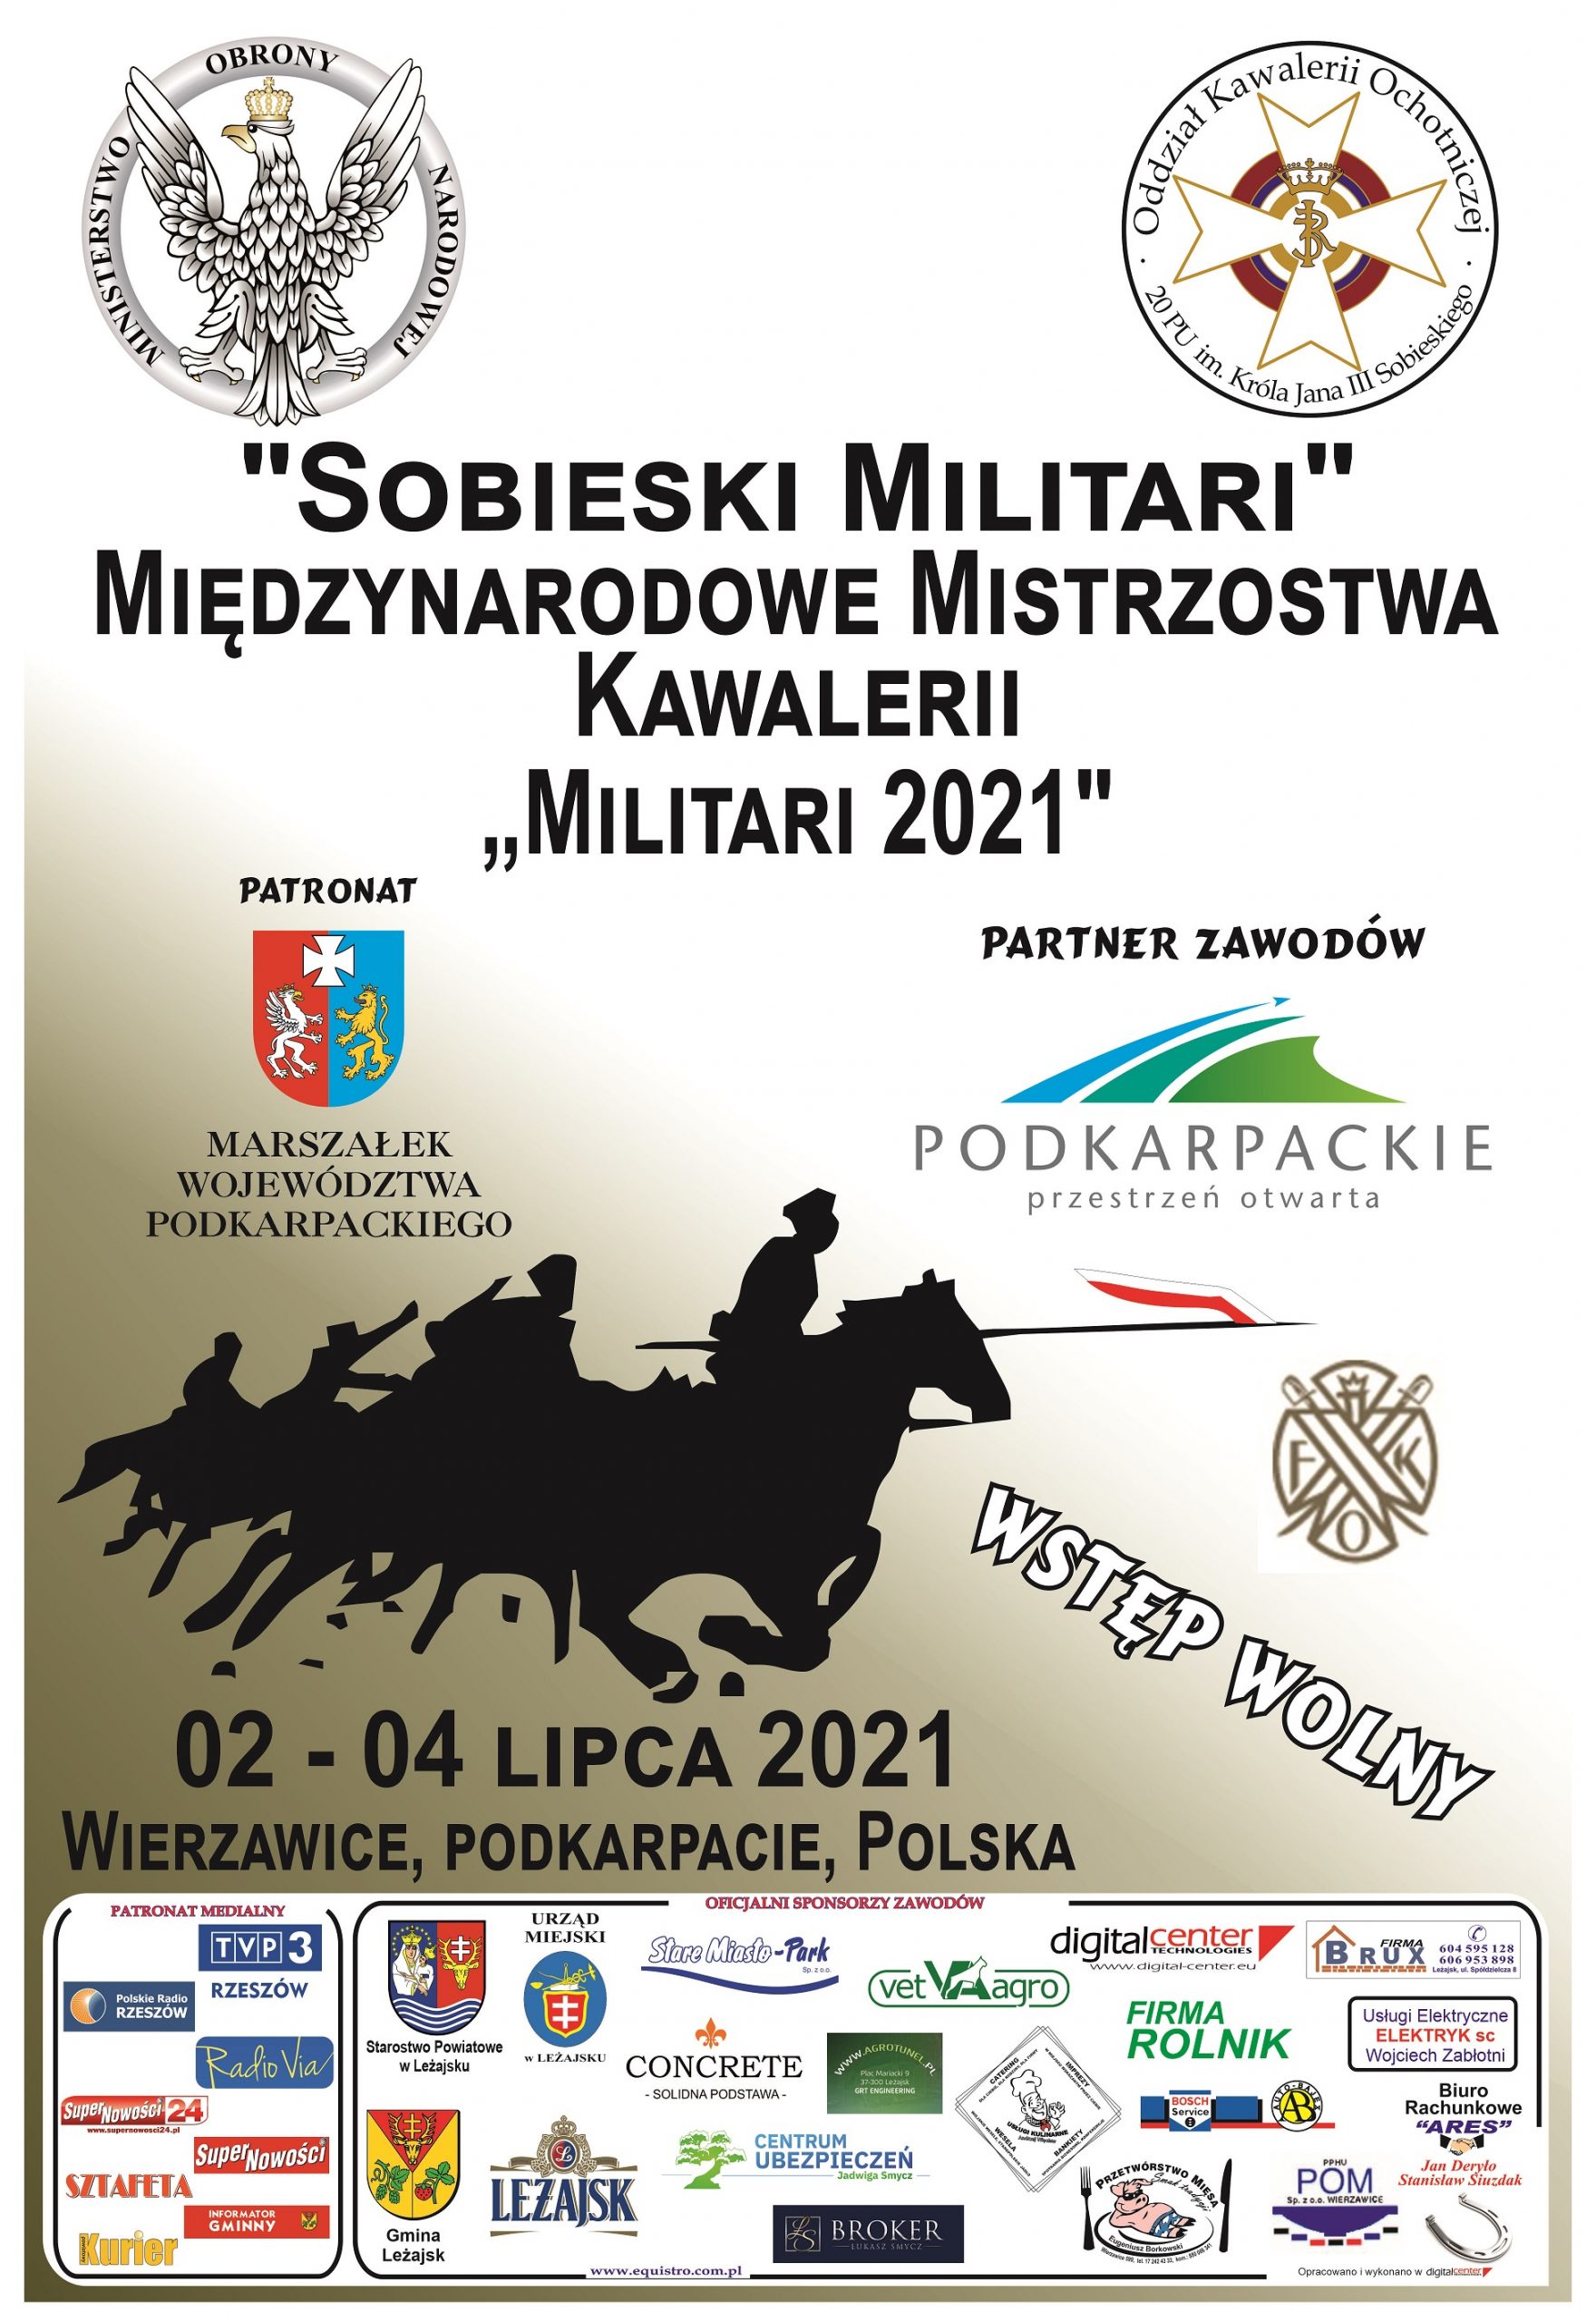 “Sobieski Militari” Międzynarodowe Mistrzostwa Kawalerii “Militari 2021”